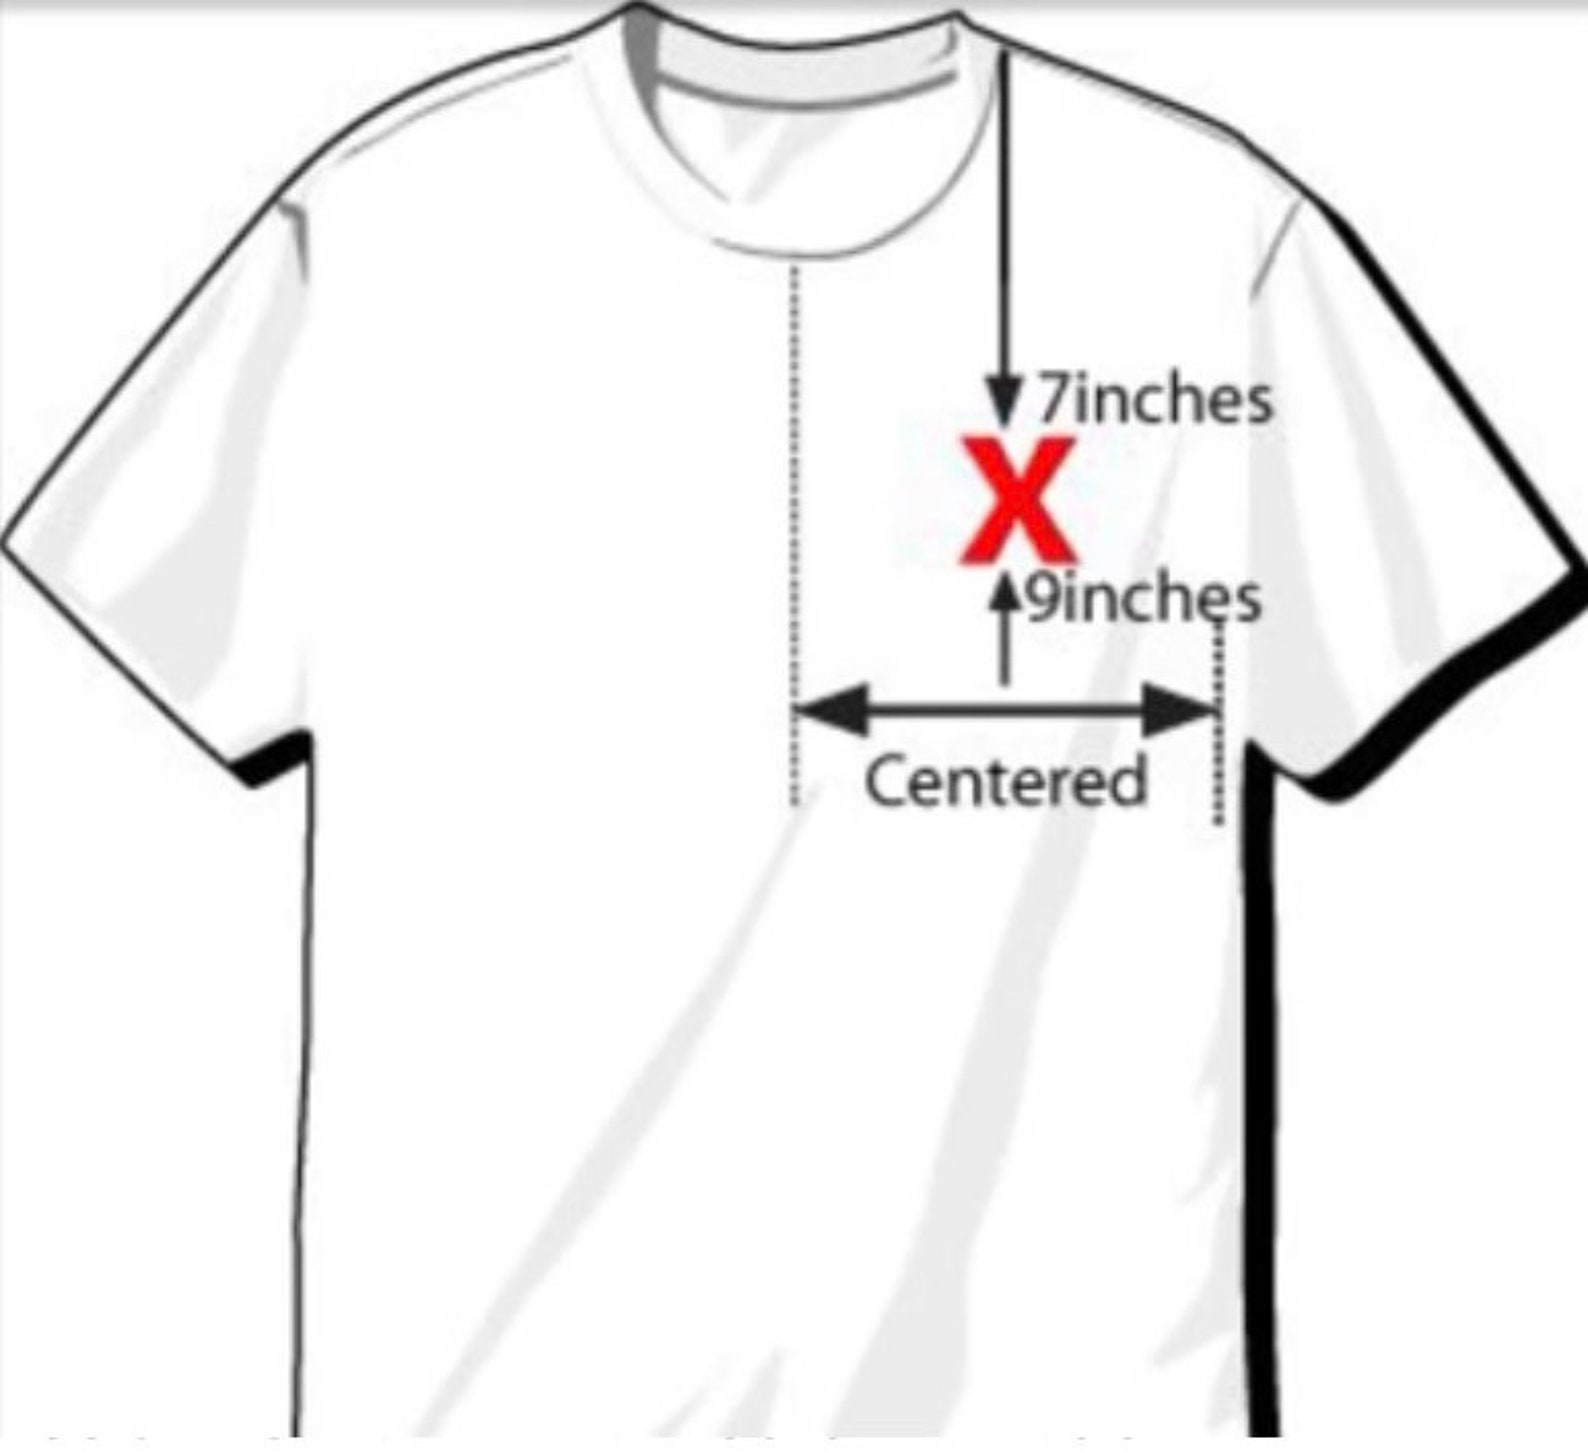 T-shirt Ruler Template - Etsy